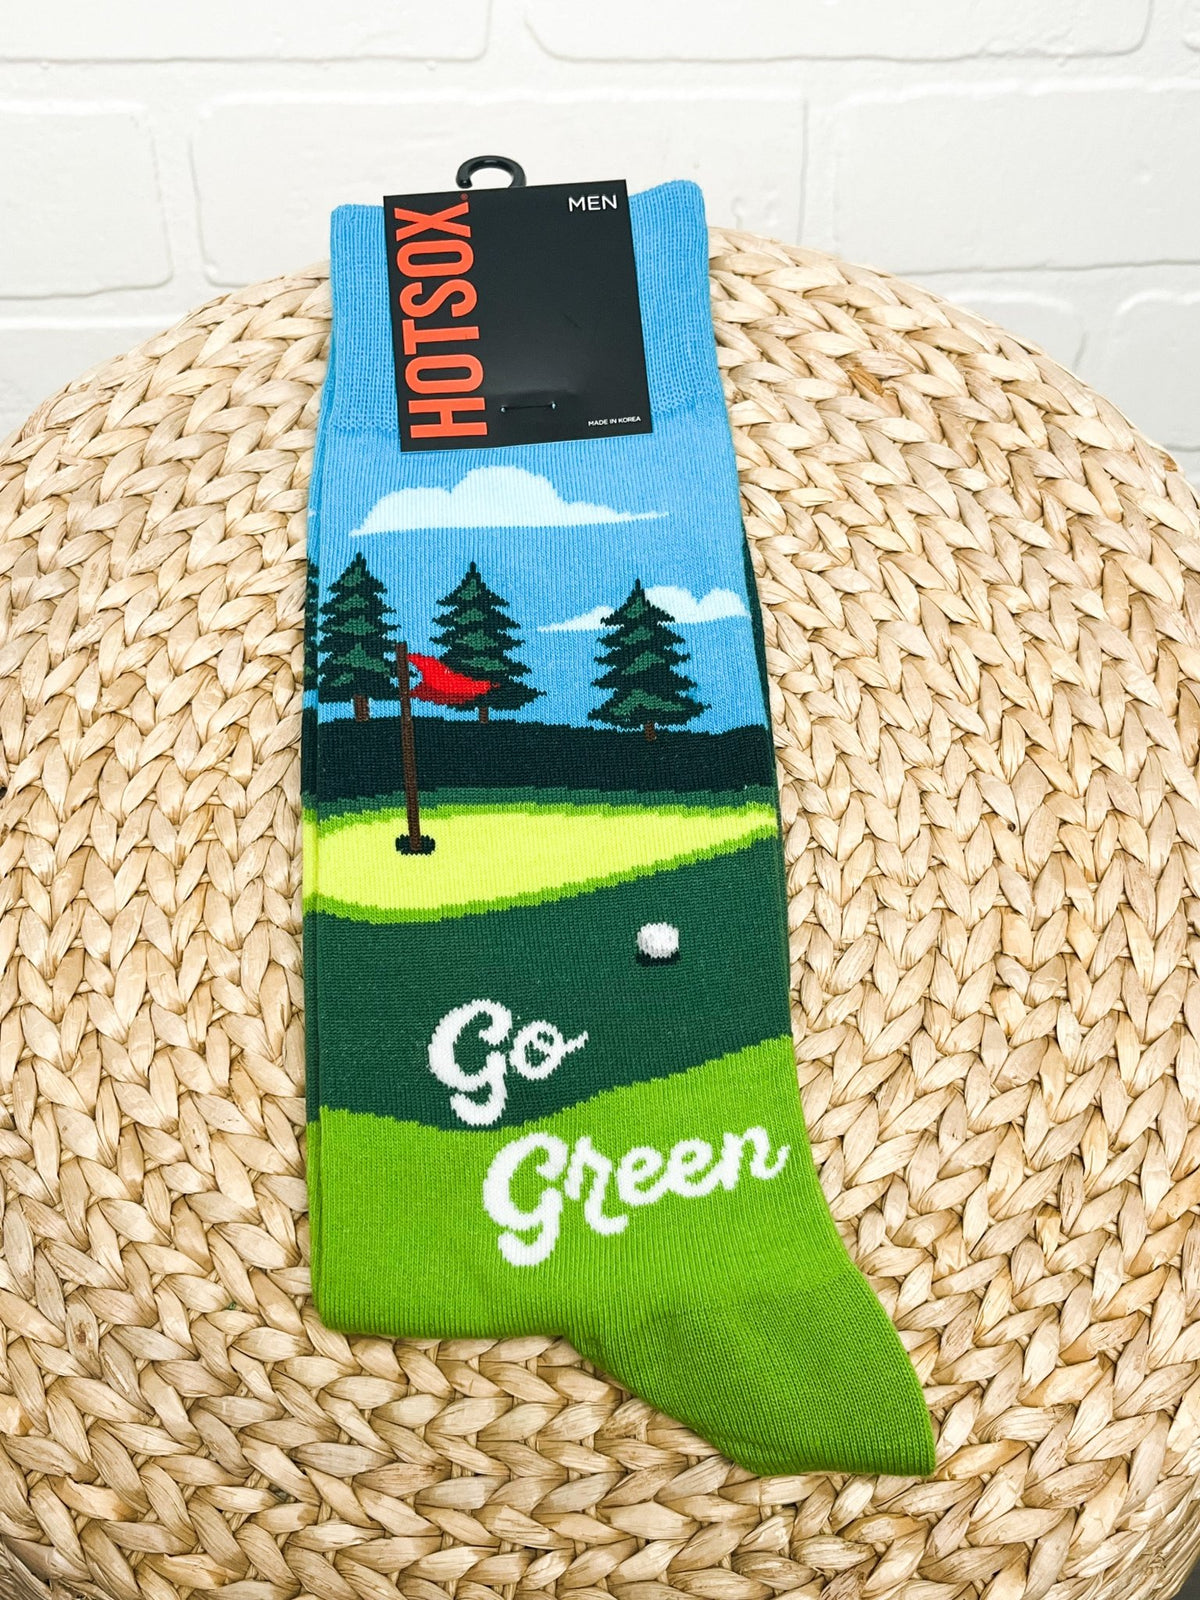 HotSox men's go green socks green - Trendy Socks at Lush Fashion Lounge Boutique in Oklahoma City